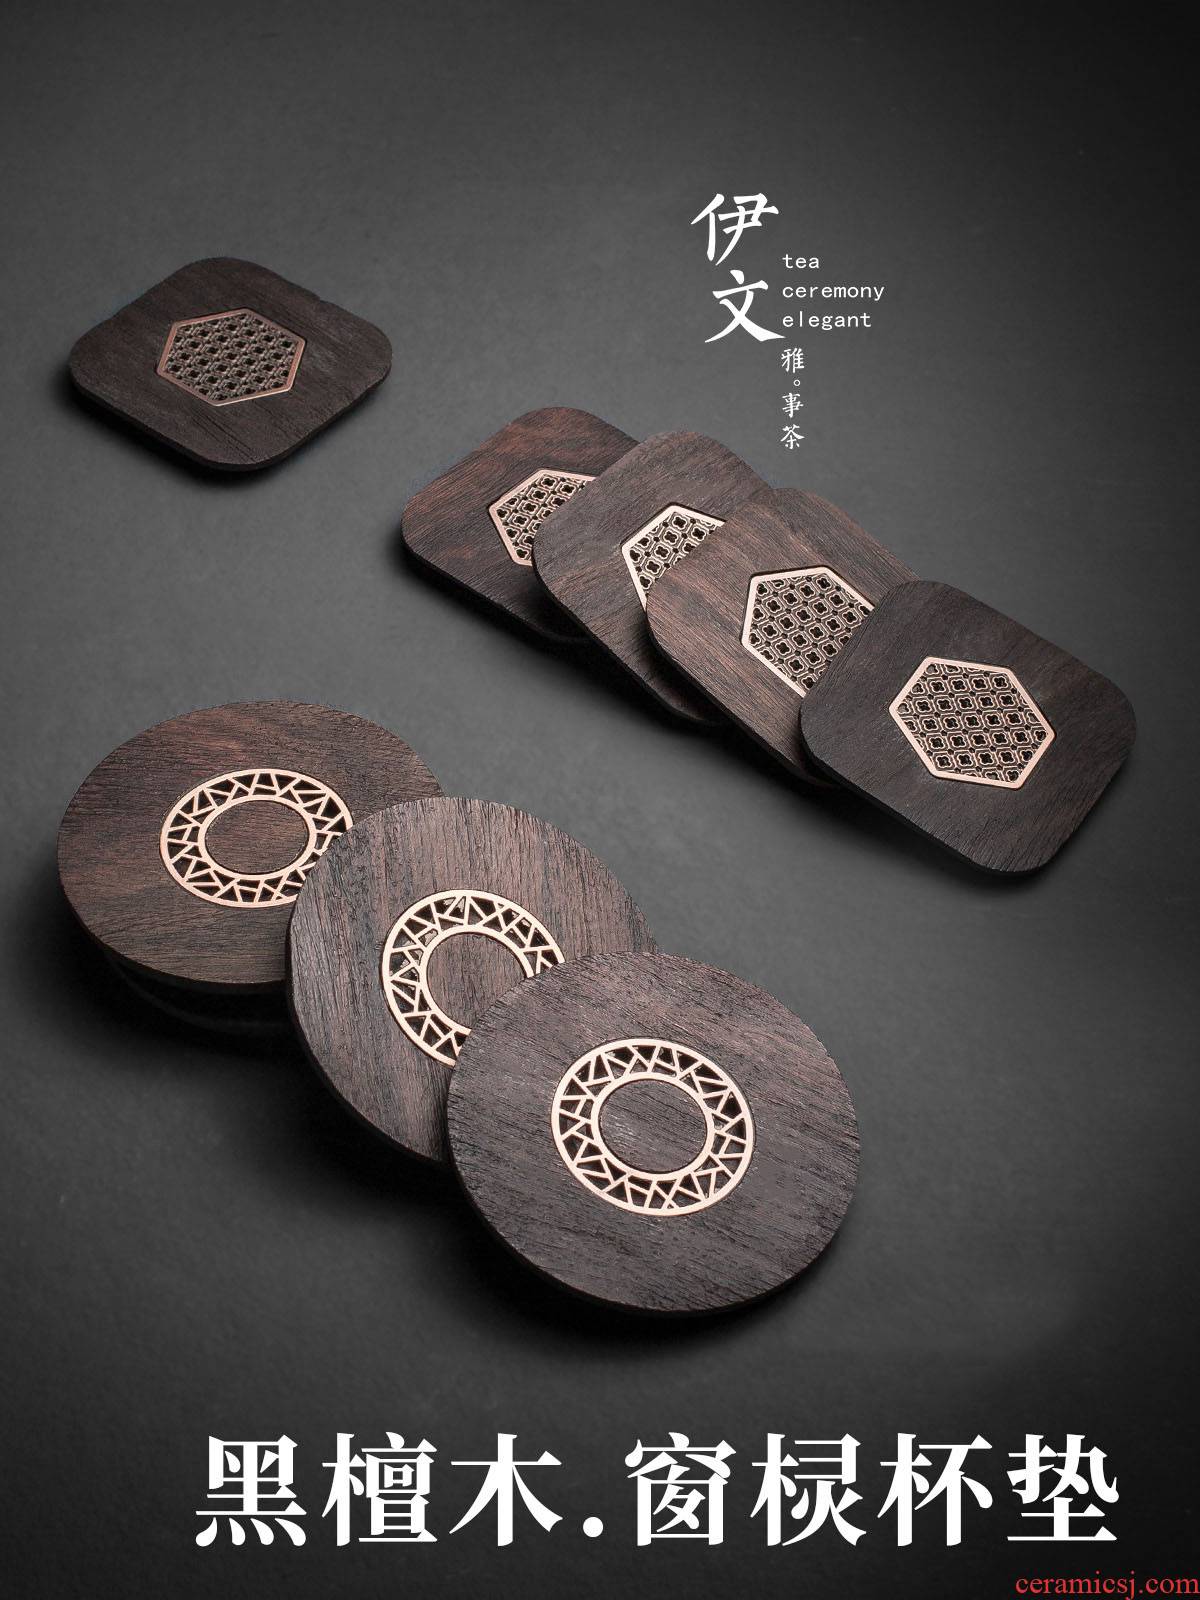 Even the ceramic creative ebony wood cup mat mat kung fu tea saucer tea accessories insulation pad